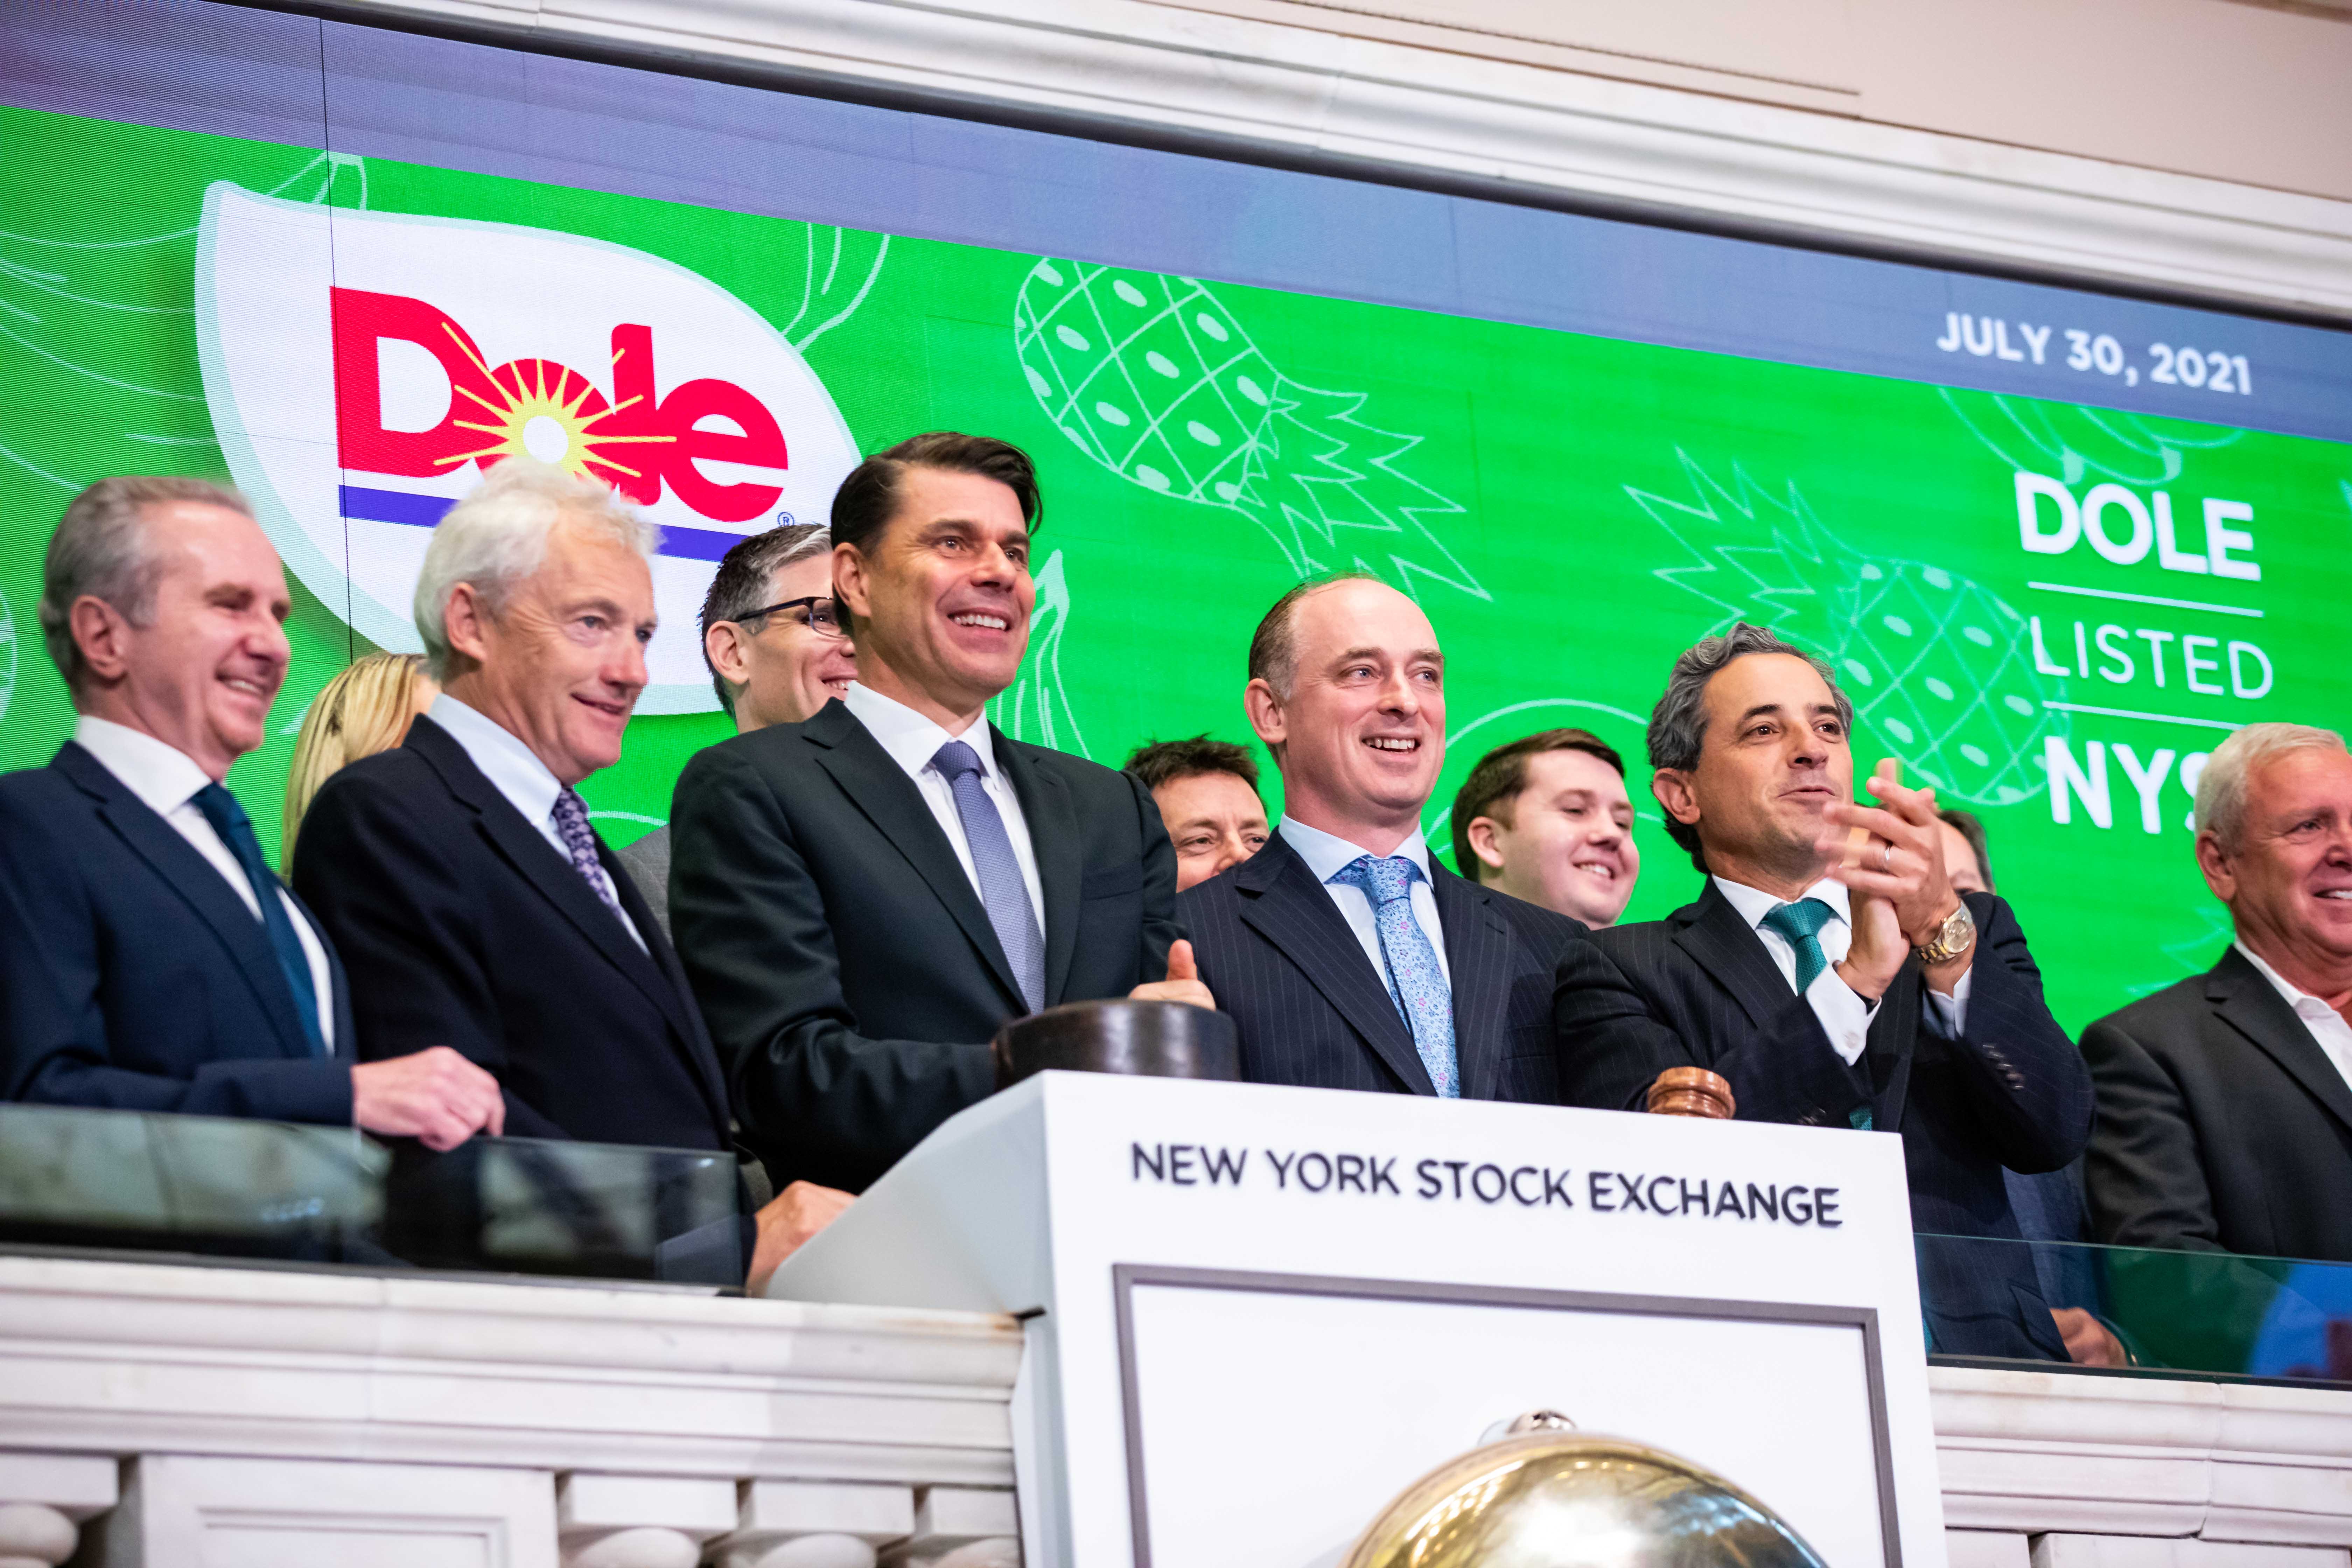 Dole stock slides 9% in public market debut on New York Stock Exchange